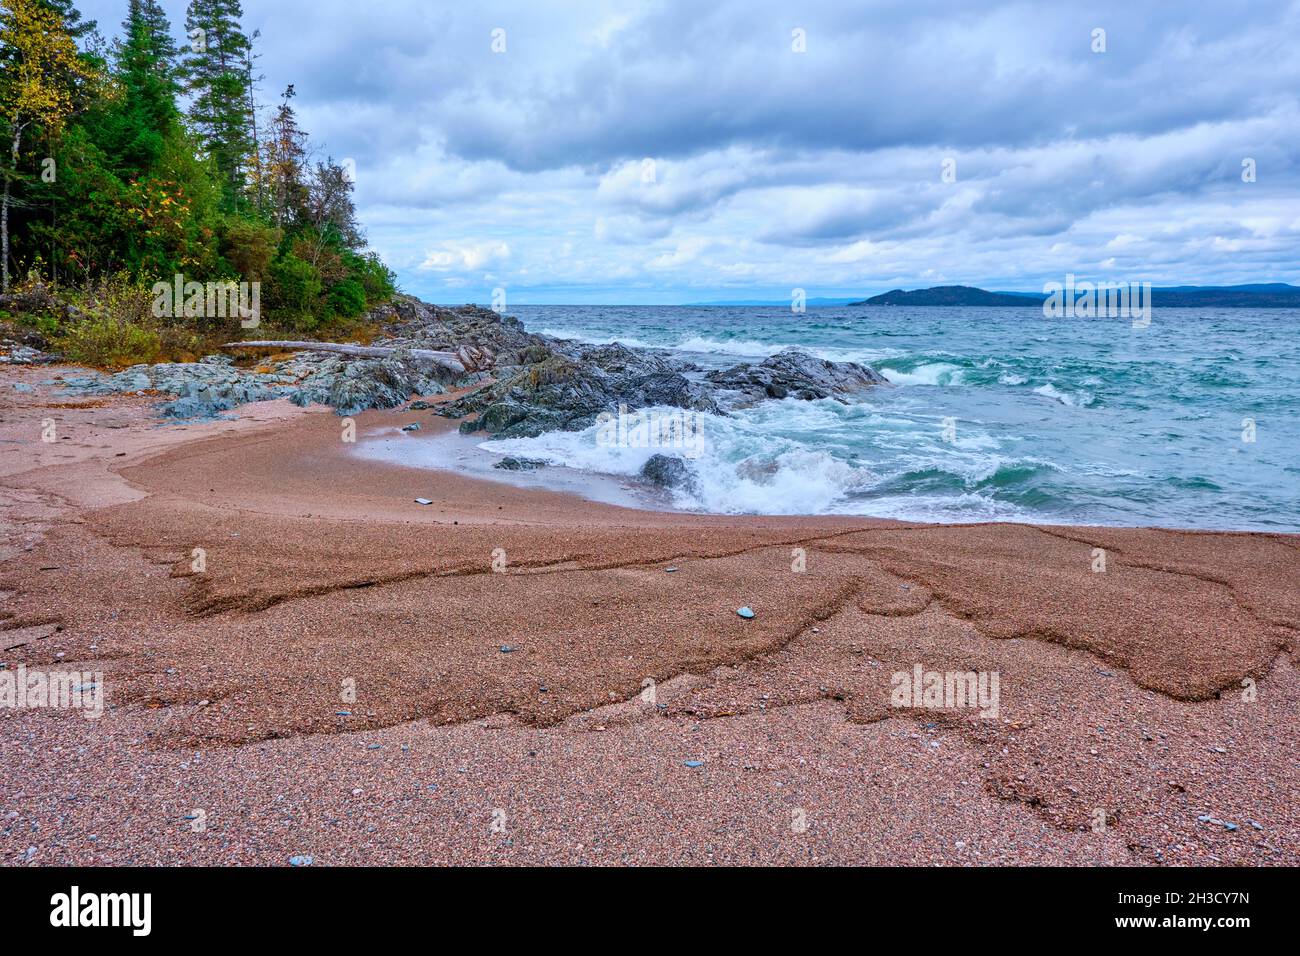 The beautiful yet sometimes dangerous Lake Superior shore Northern Ontario. Stock Photo